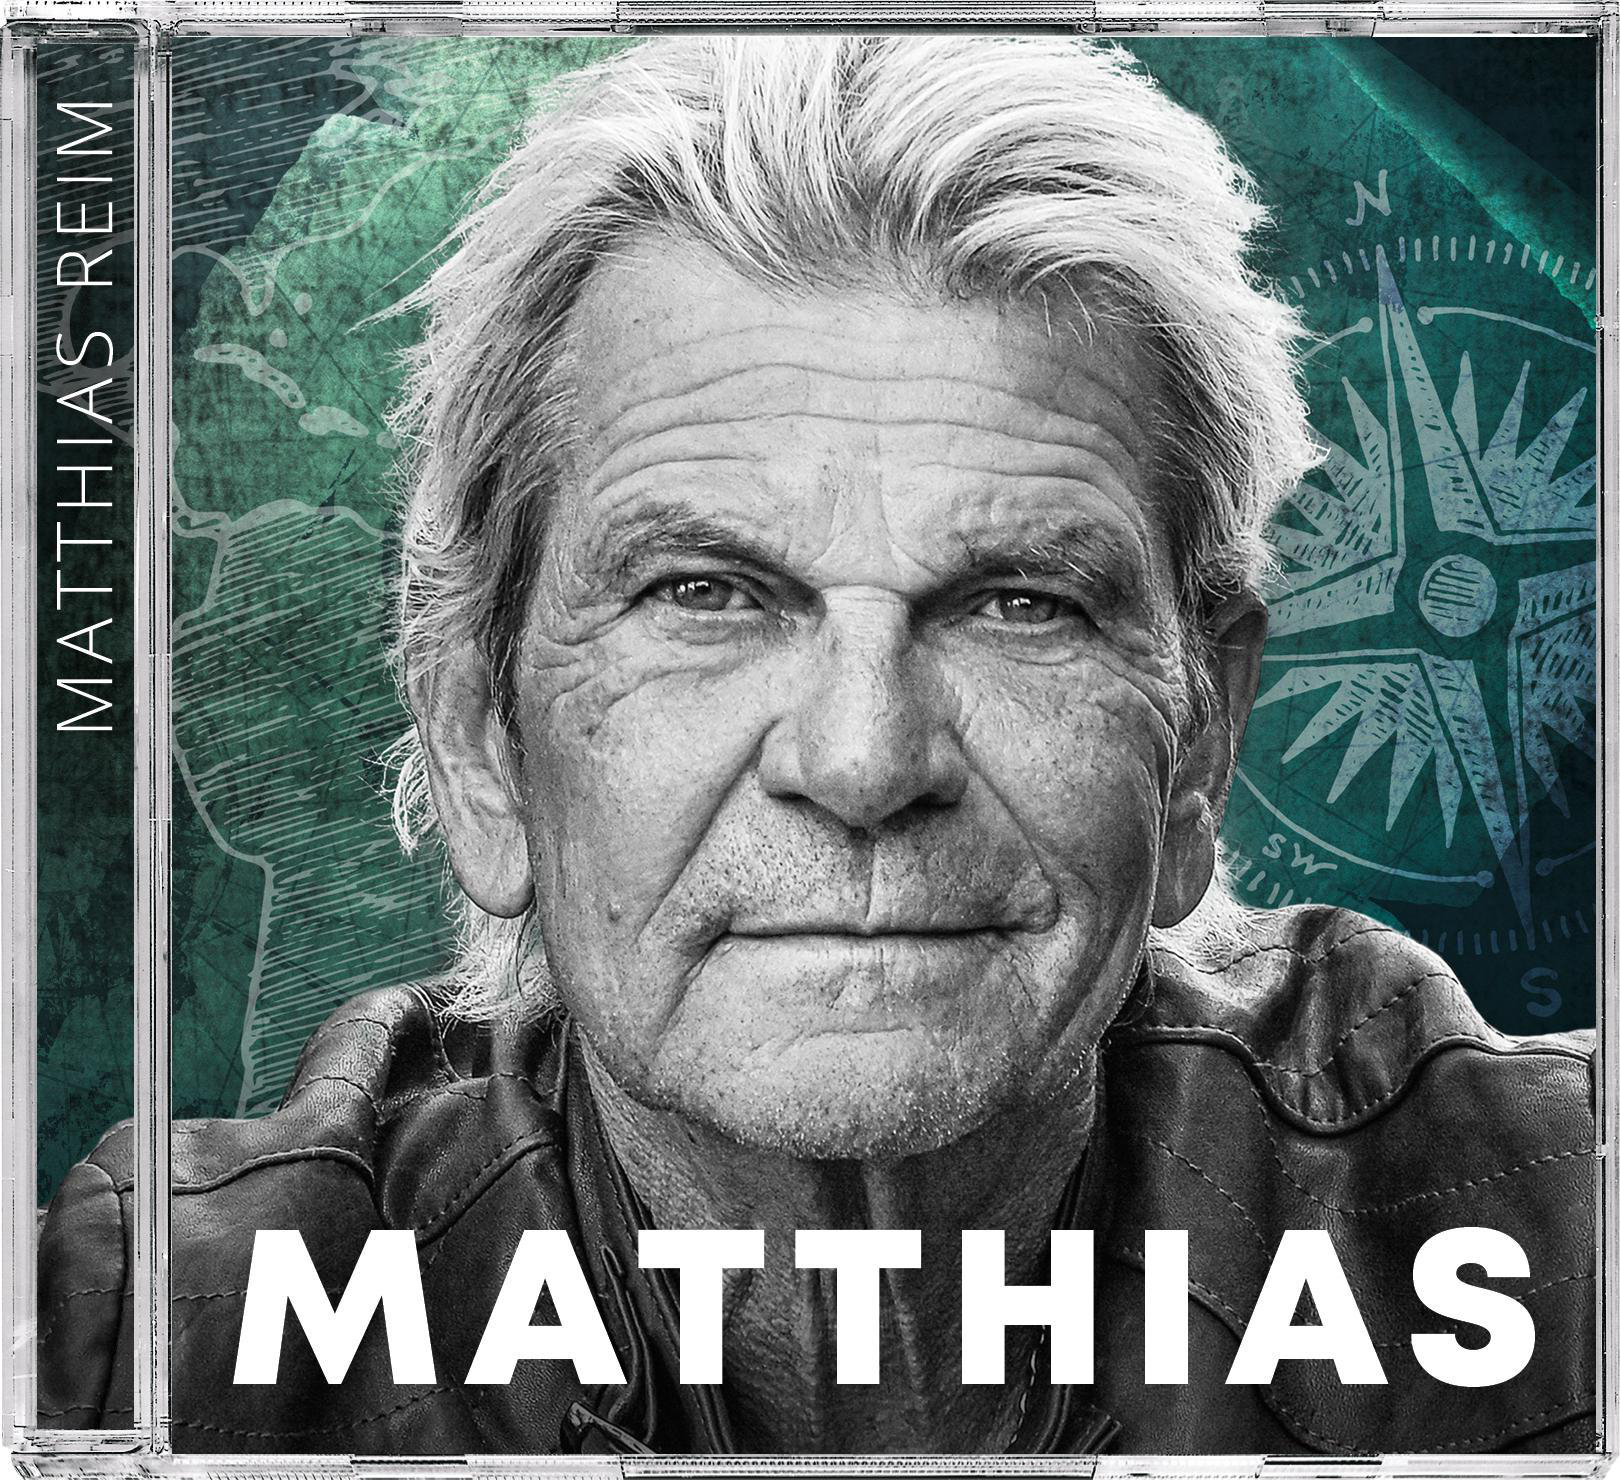 - MATTHIAS - Matthias (CD) Reim